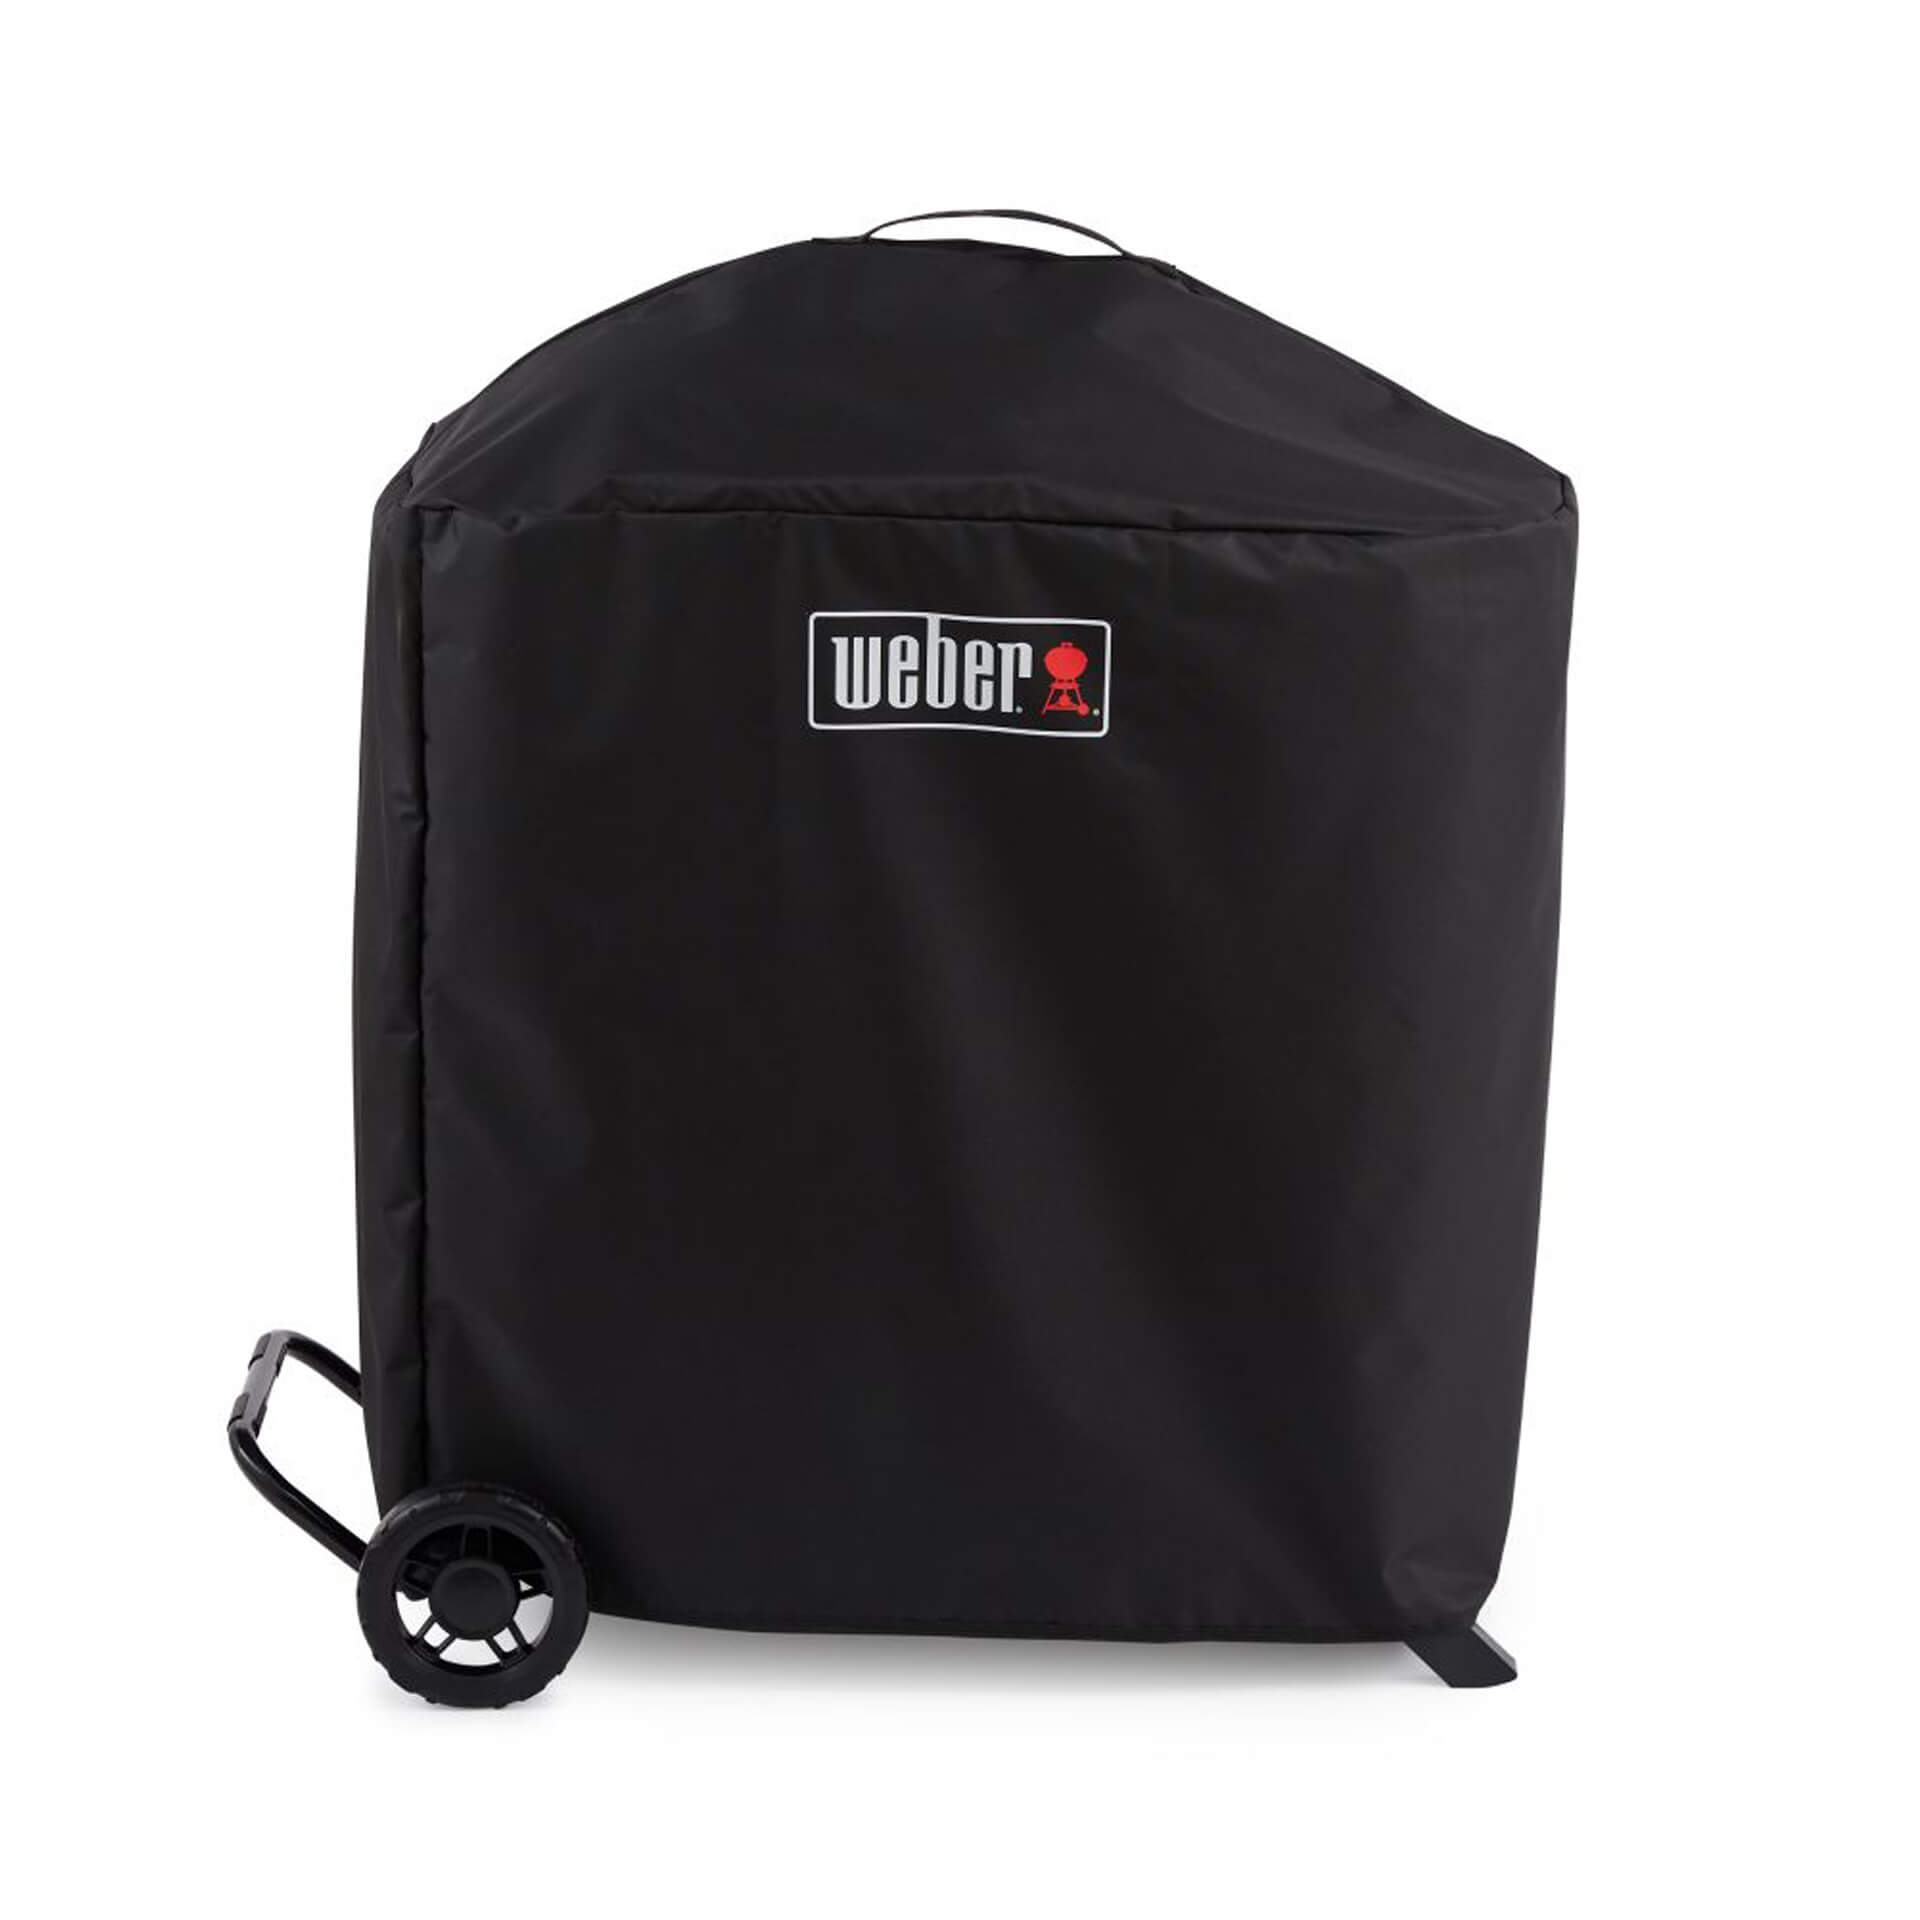 Weber Abdeckhaube Premium Traveler Compact